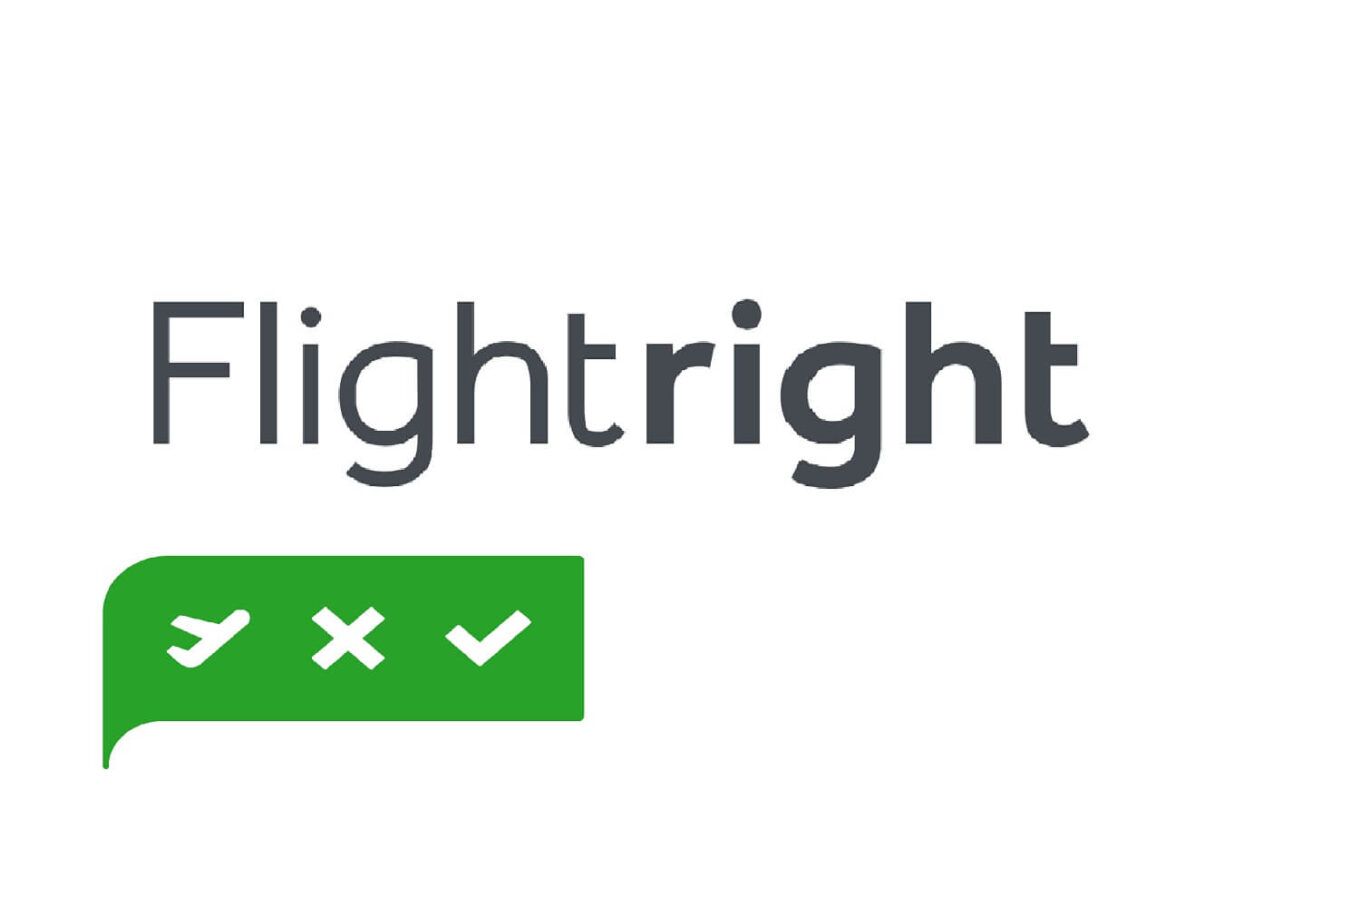 Flightright Recensione